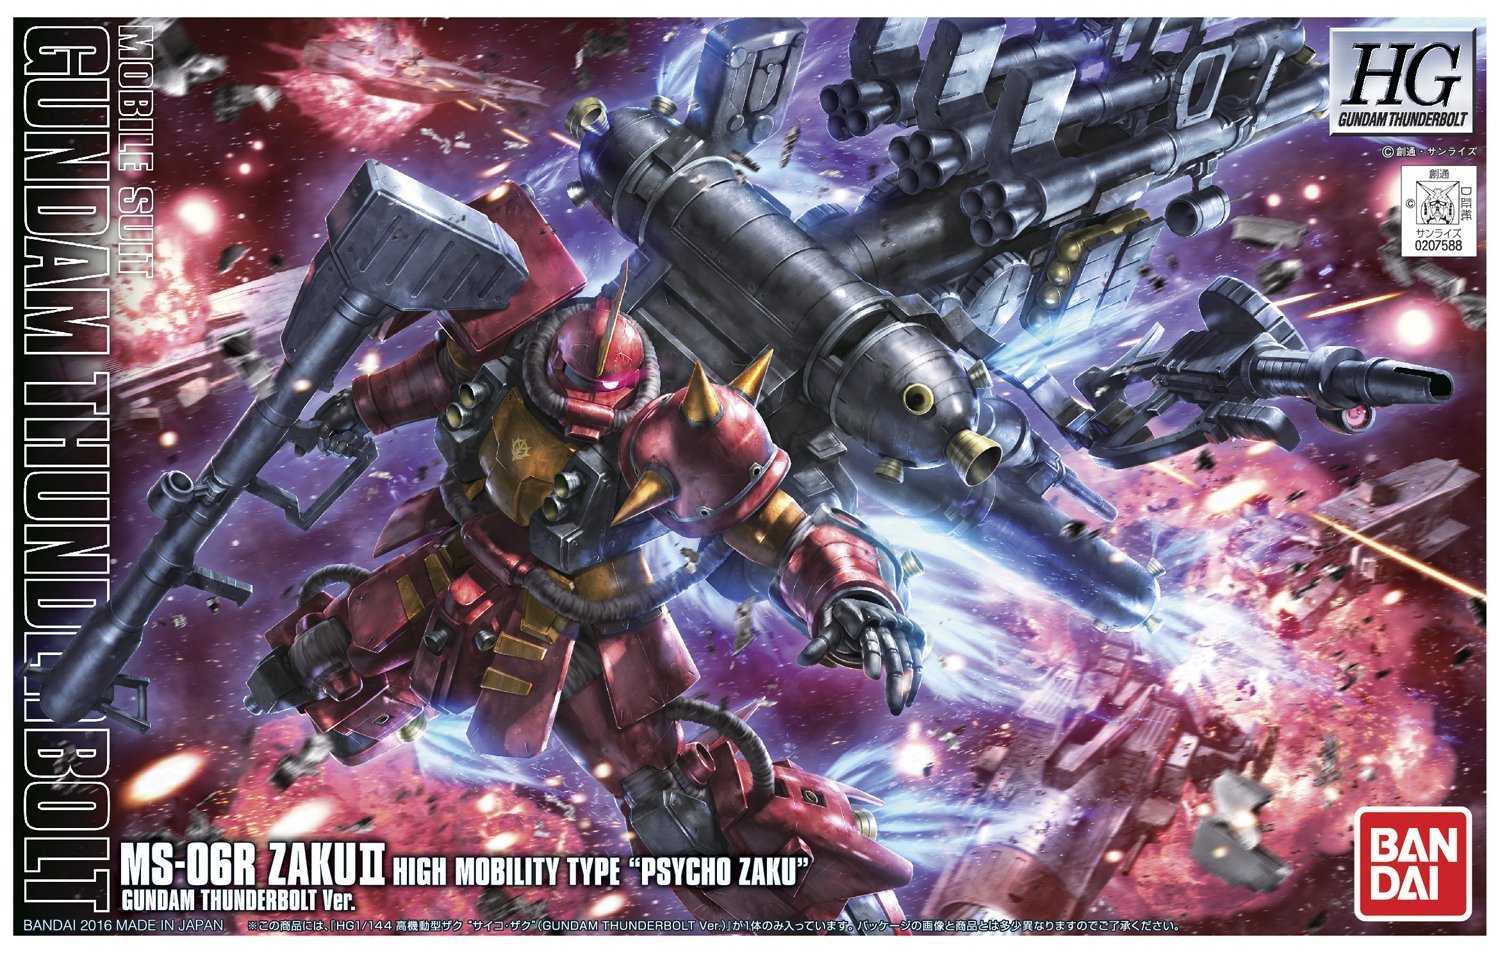 Gundam High Grade Thunderbolt: High Mobility Type "Psycho Zaku" (Thunderbolt Anime Color) "Gundam Thunderbolt" 